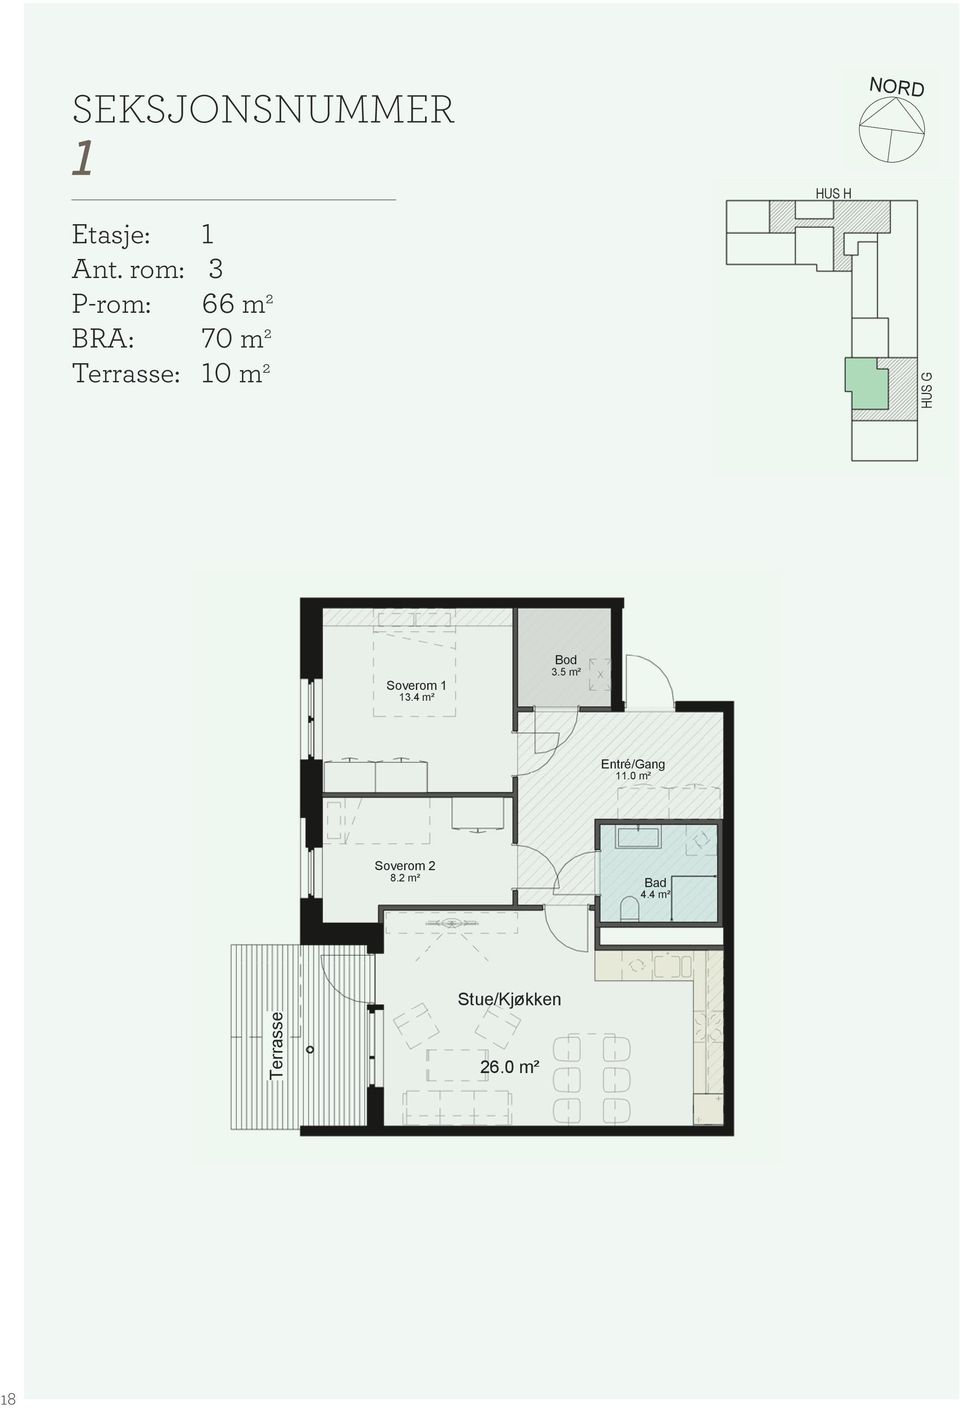 4 m² 3.5 m² 11.0 m² Soverom 8. m² 13.4 m² 3.5 m² 4.4 m² 11.0 m² Terrasse Soverom 8. m² 6.0 m² 4.4 m² Terrasse 6.0 m² SEKSJ.